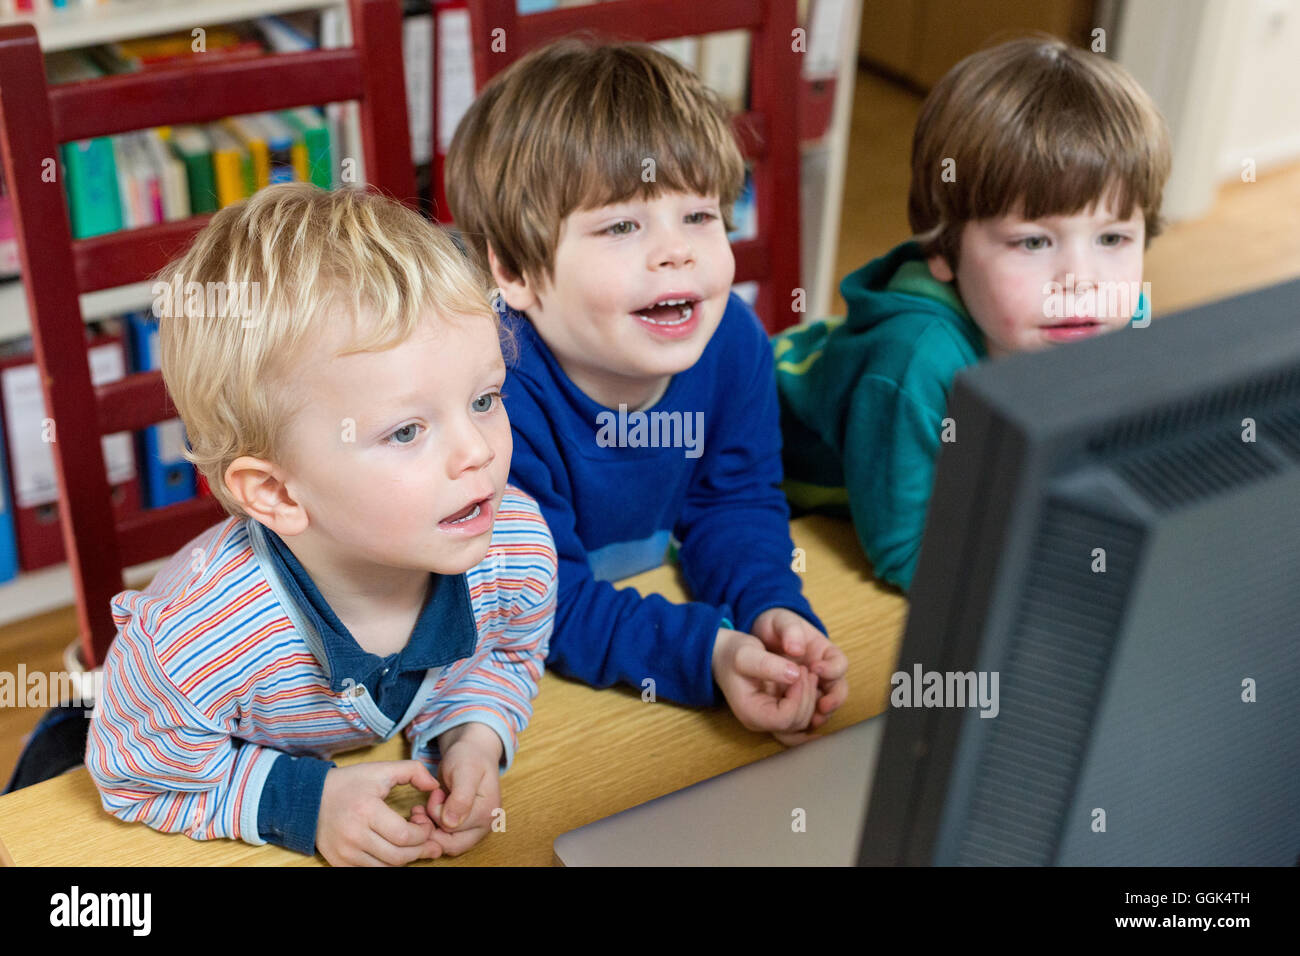 Three boys looking at a computer screen Stock Photo